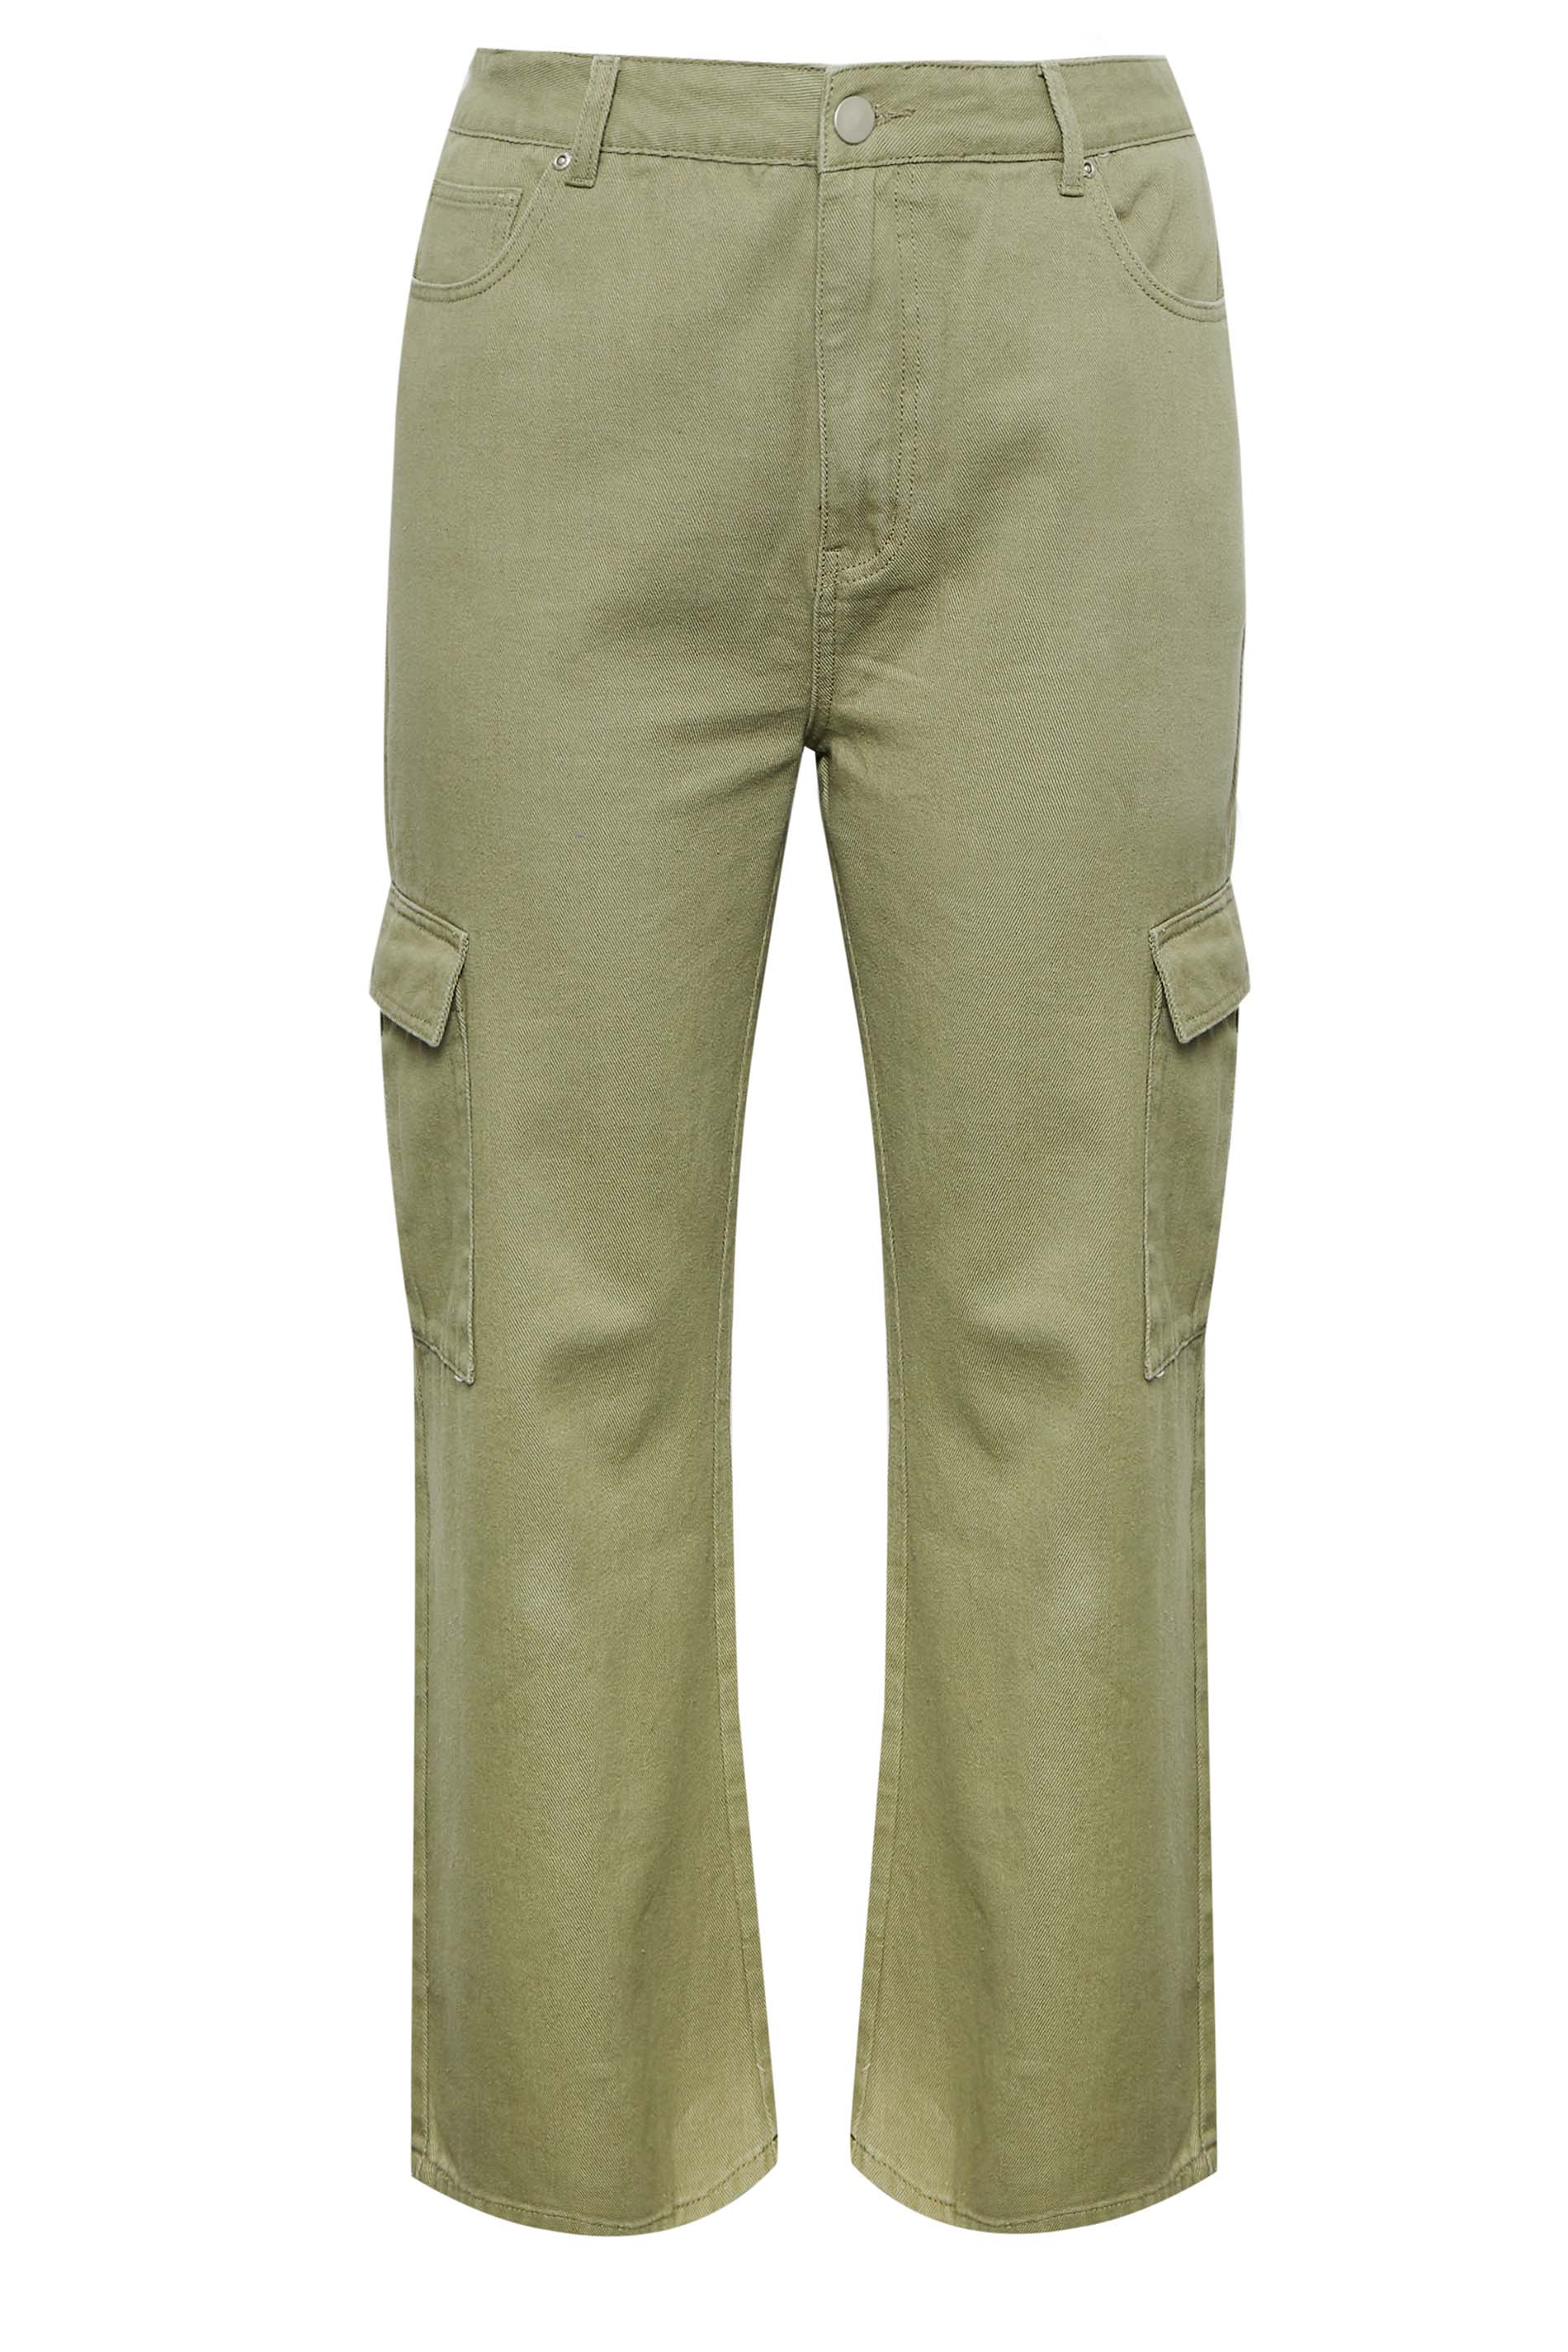 Men's Green Trousers | Khaki Chinos | Next